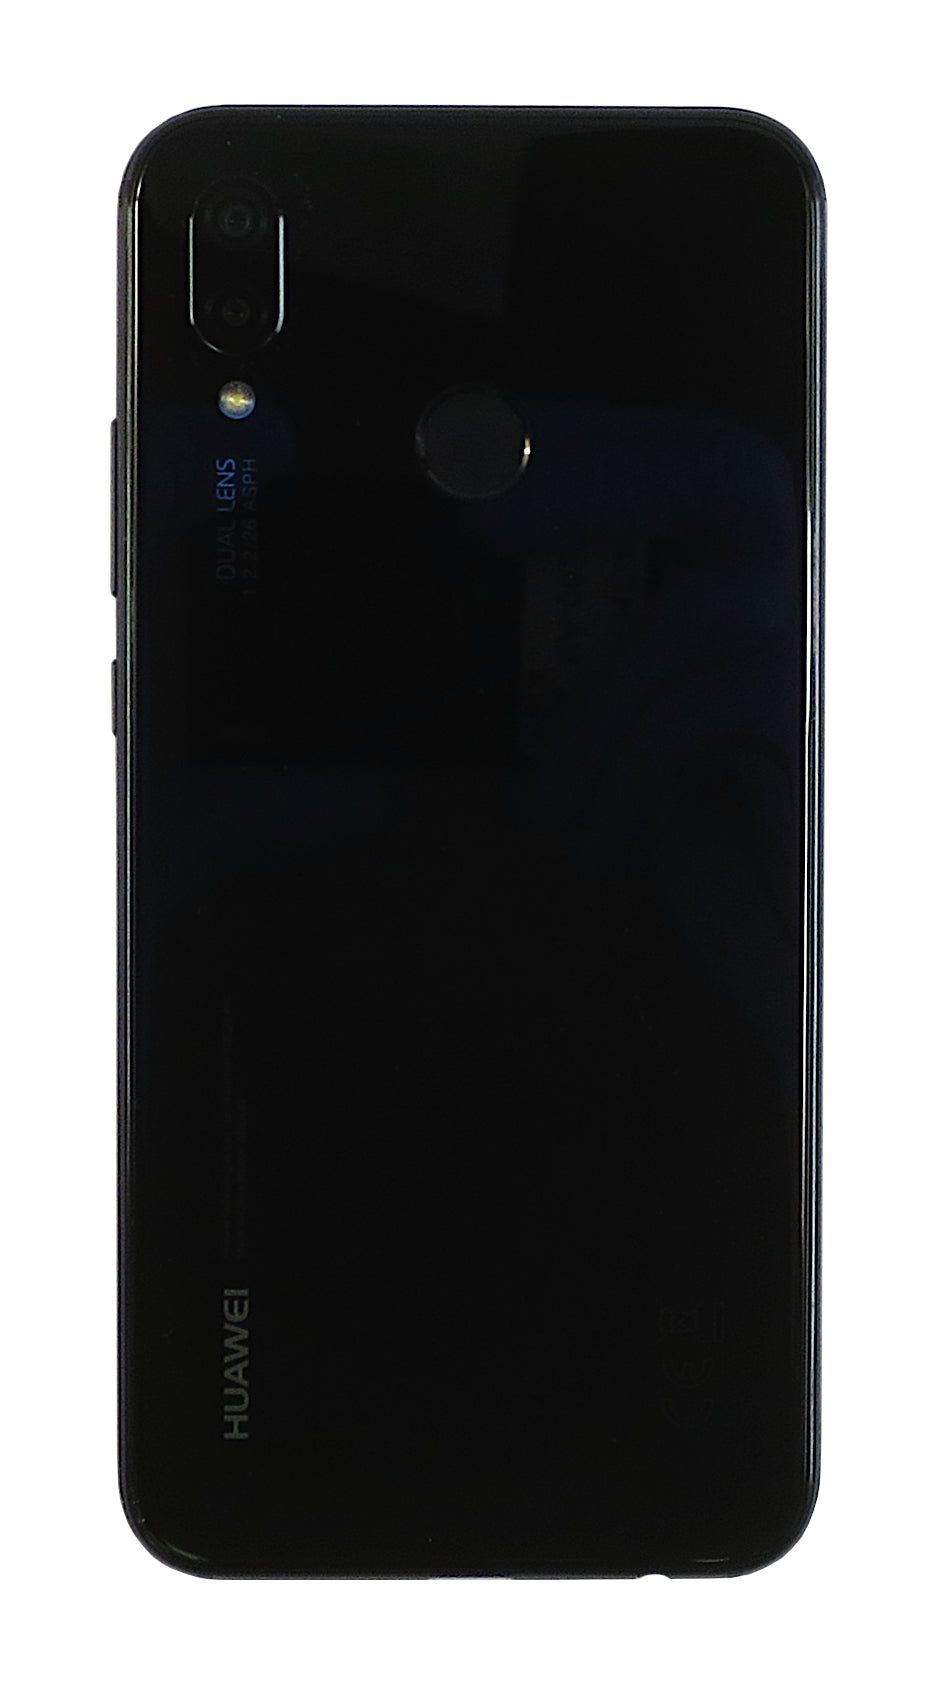 Huawei P20 Lite Smartphone, 64GB, Vodafone, Black, ANE-LX1